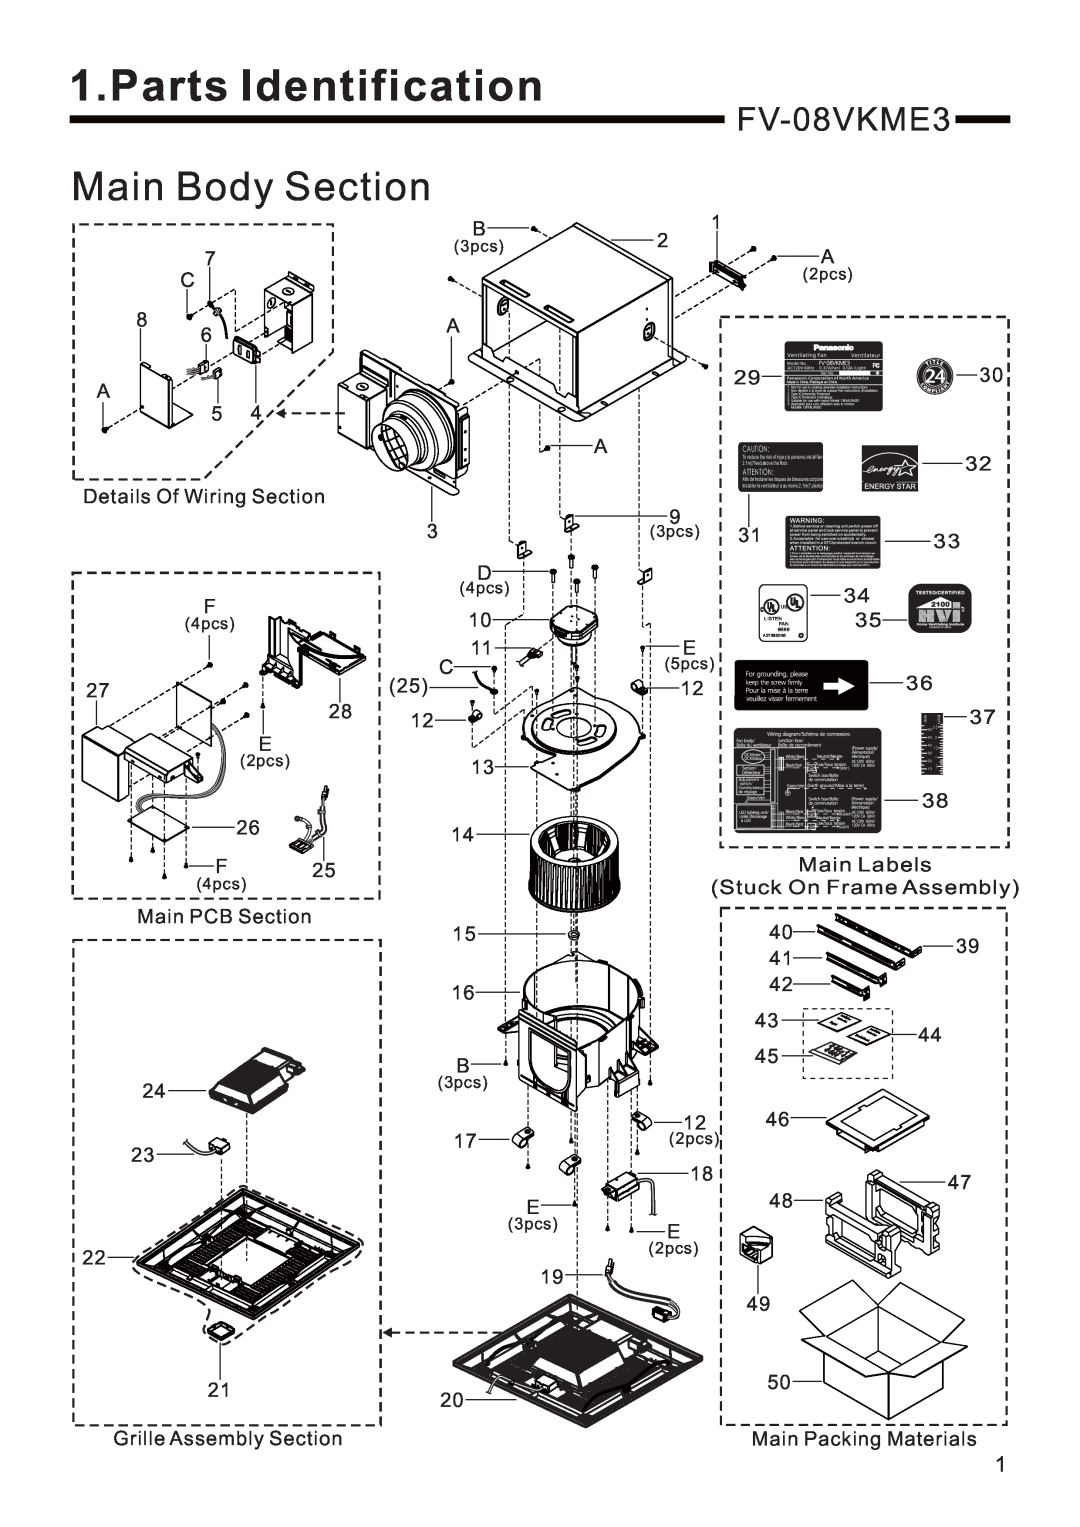 Panasonic FV-08VKSE3 service manual Parts Identification, Main Body Section, FV-08VKME3 